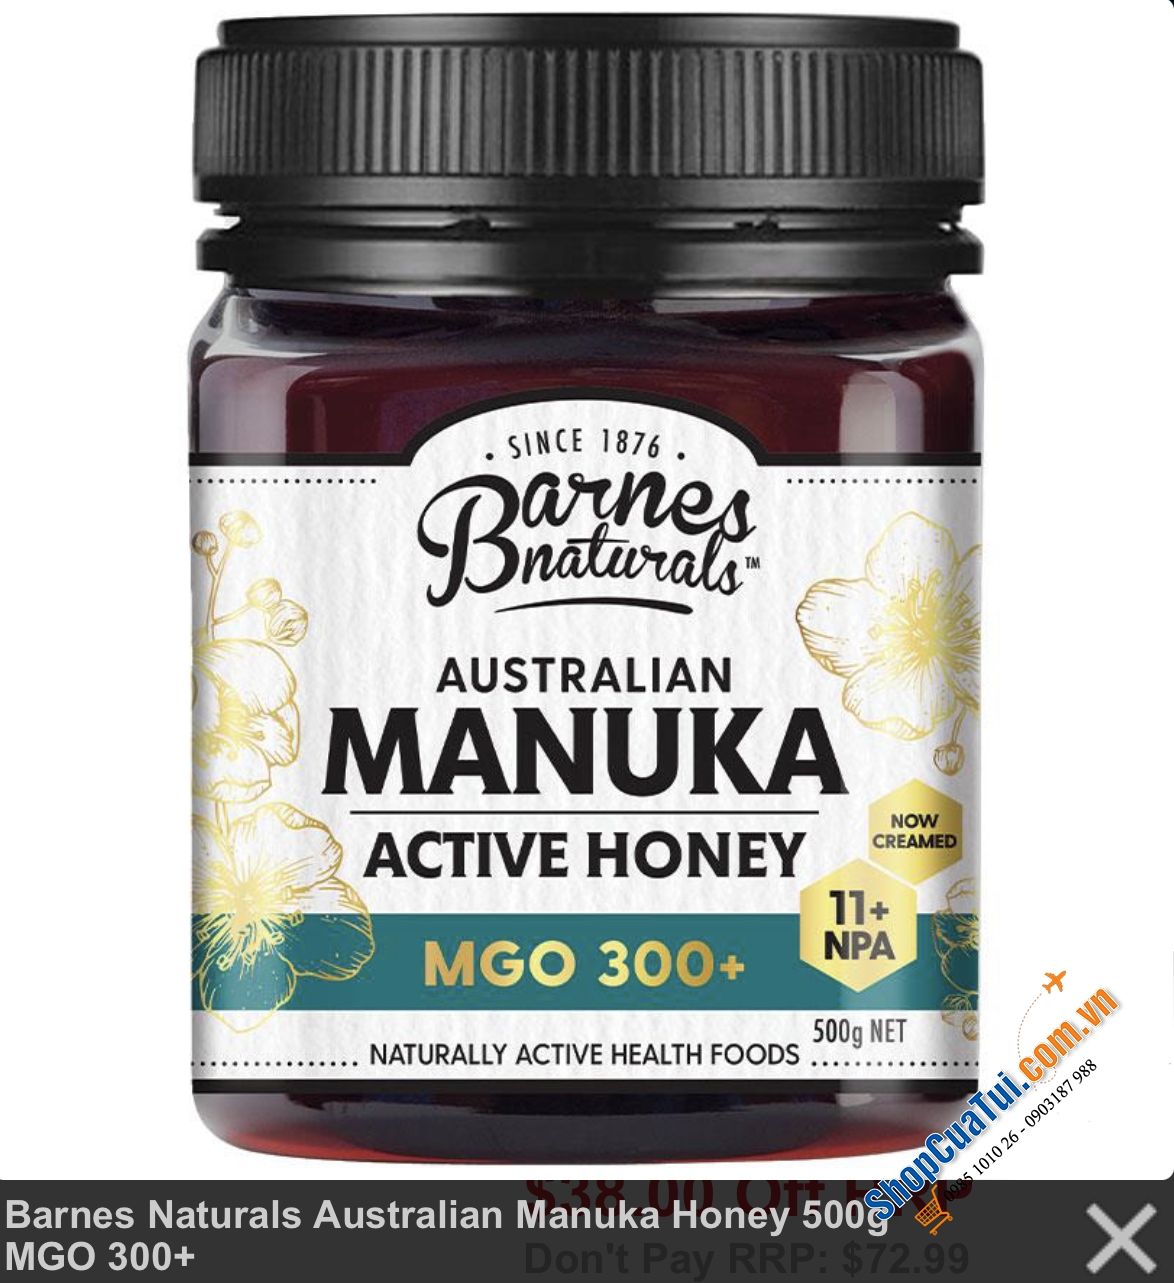 Mật ong Barnes Naturals Australian Manuka Honey 500g MGO 300+ tương đương NPA 11+